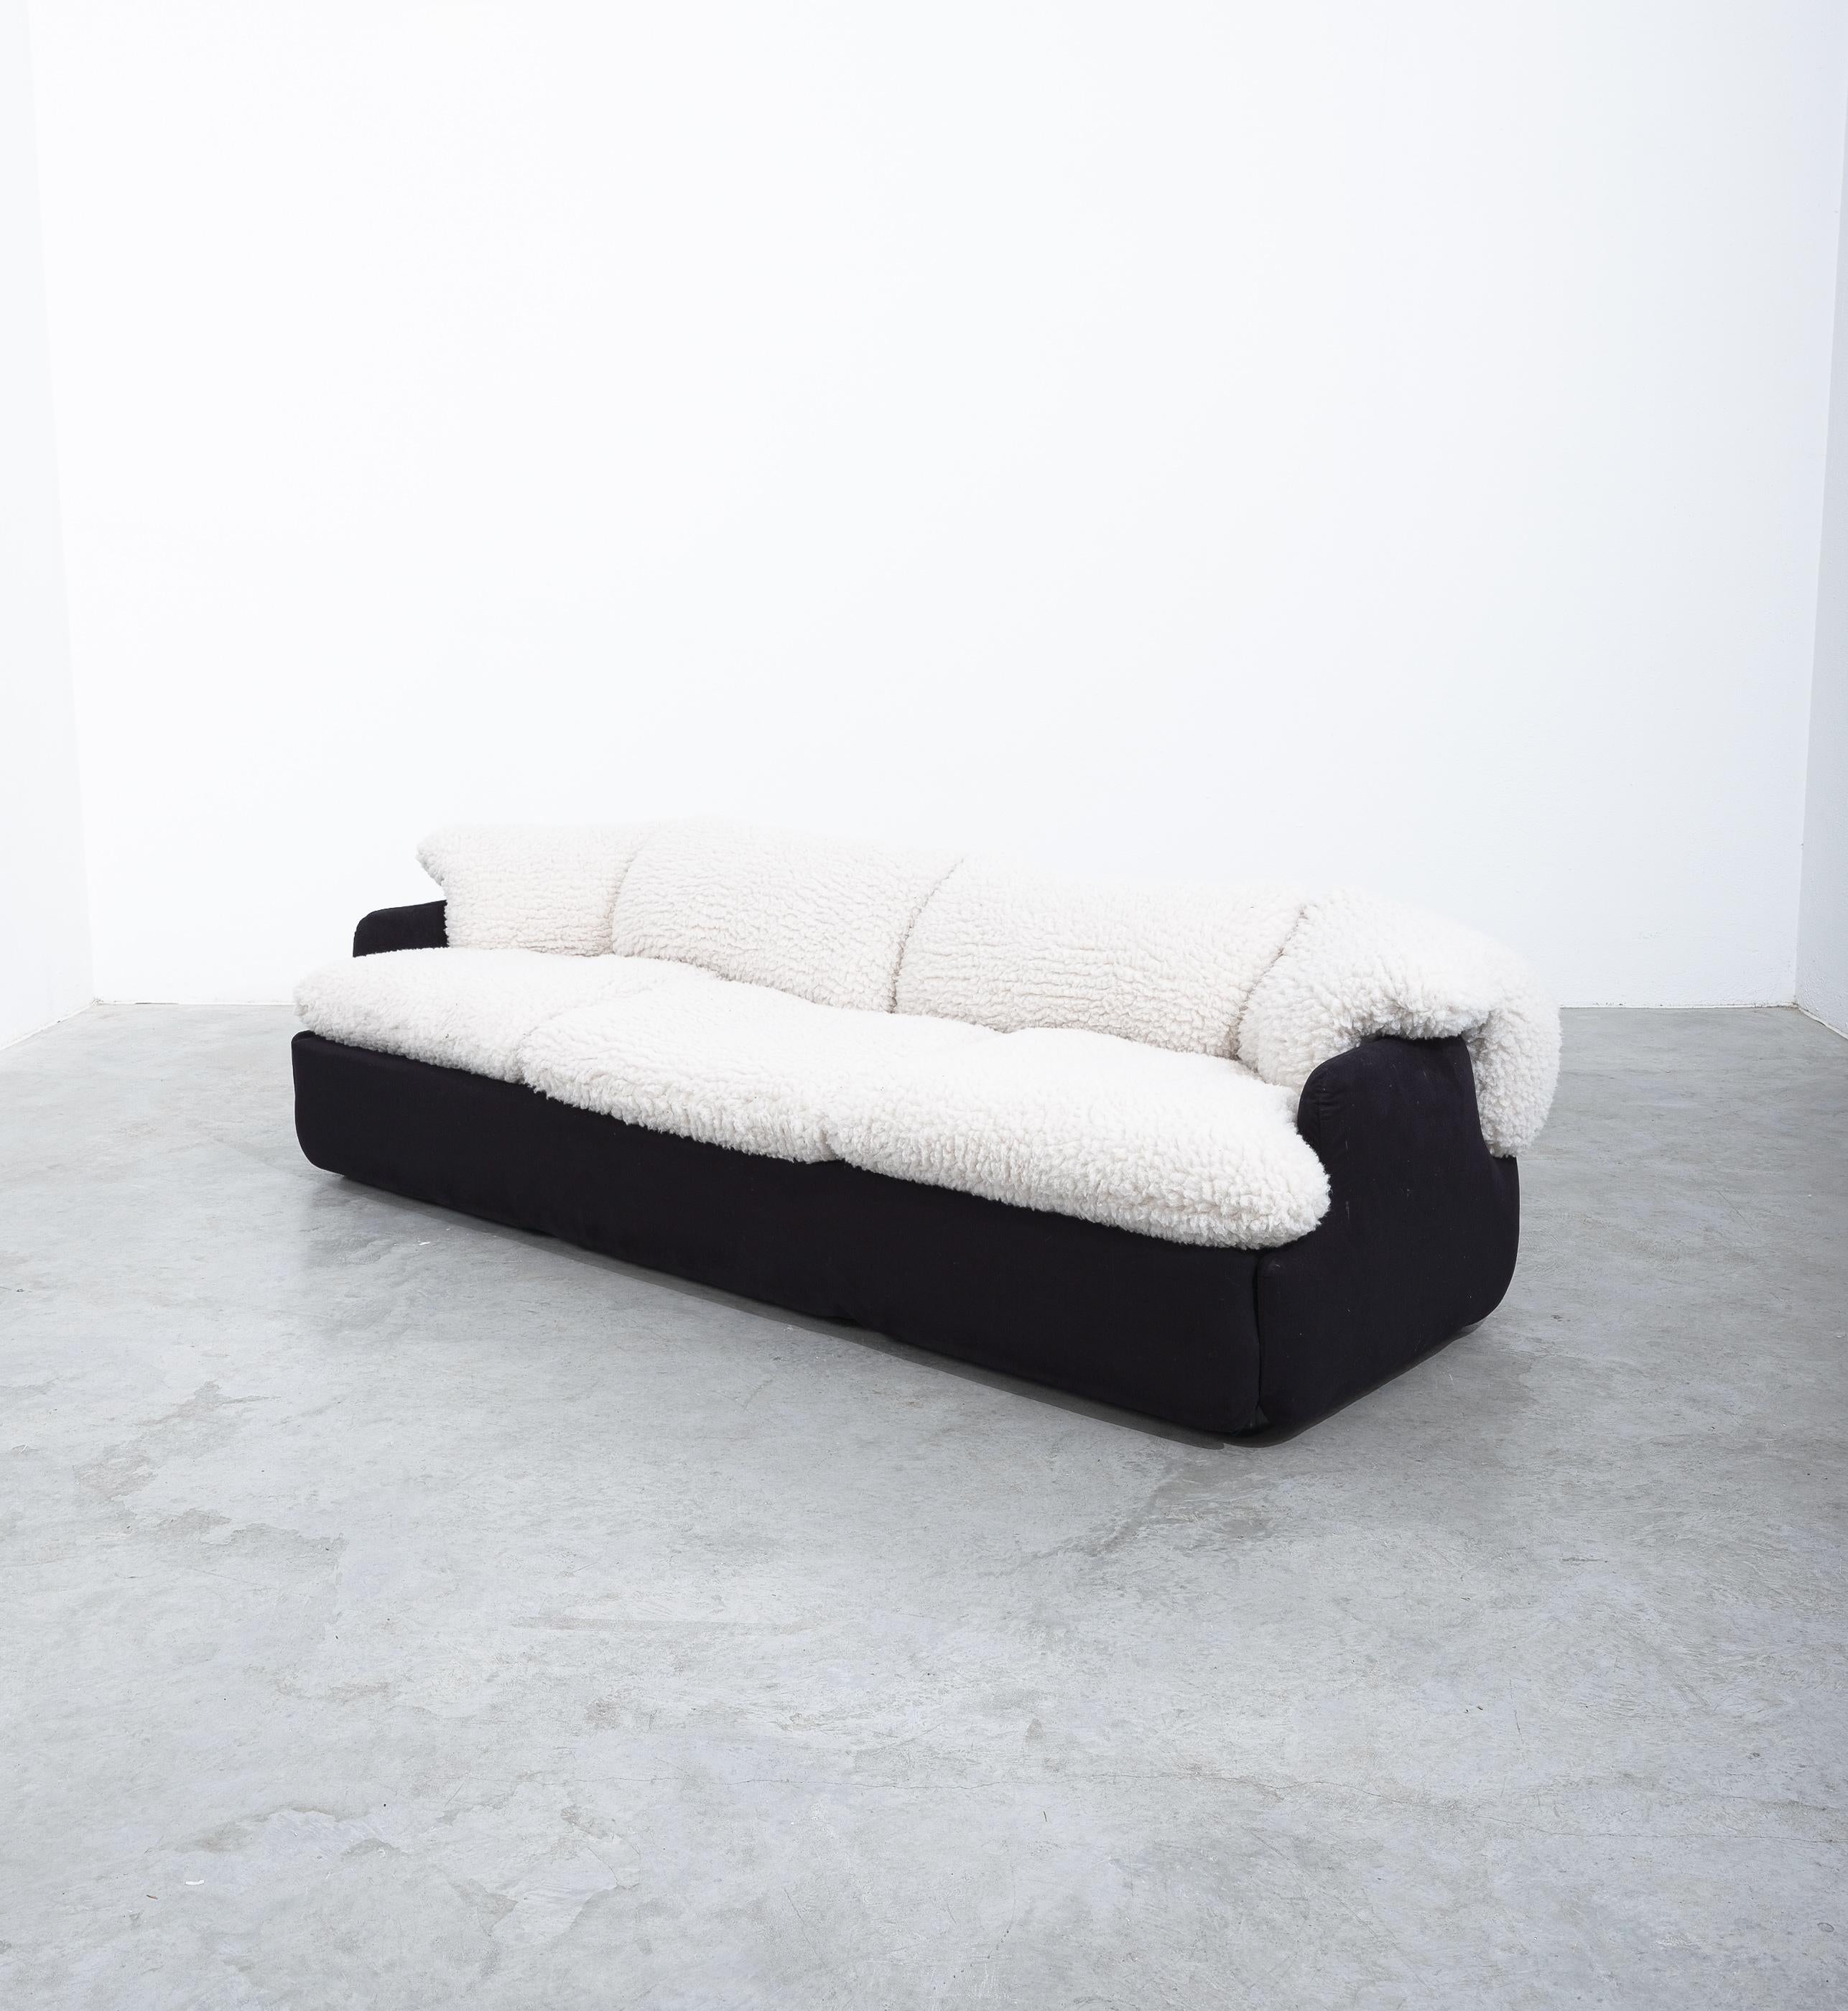 Alberto Rosselli Sofa For Saporiti 'Confidential' White Black Wool, Italy 1970 For Sale 4